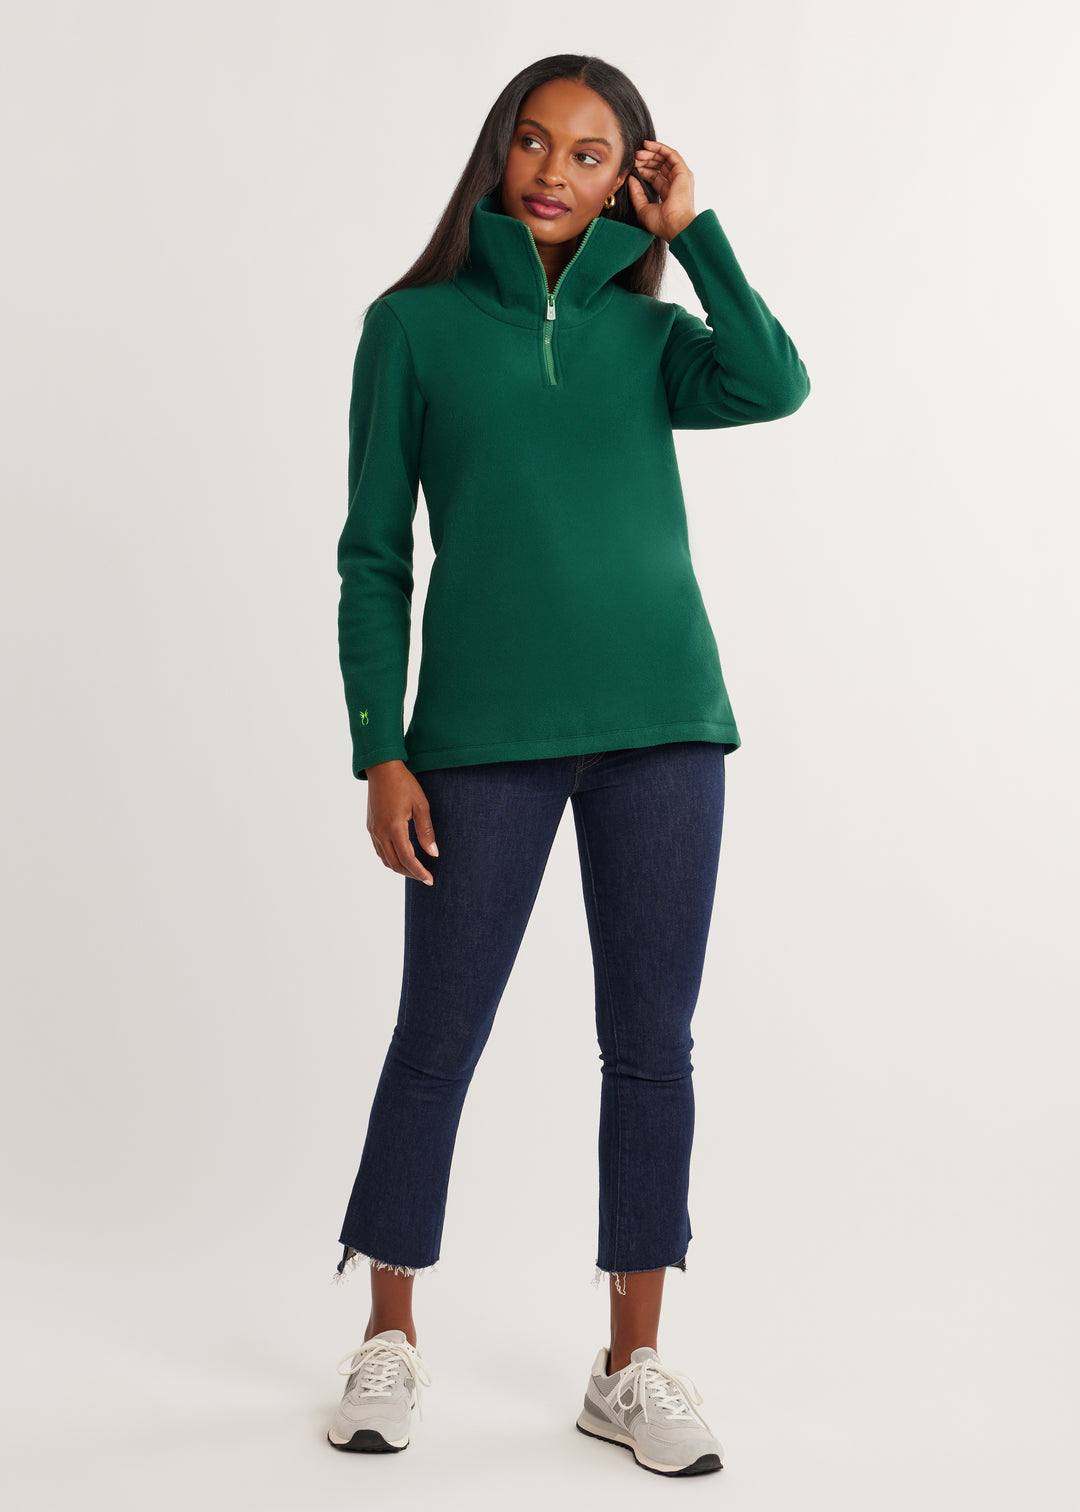 Prospect Pullover in Vello Fleece (Emerald)